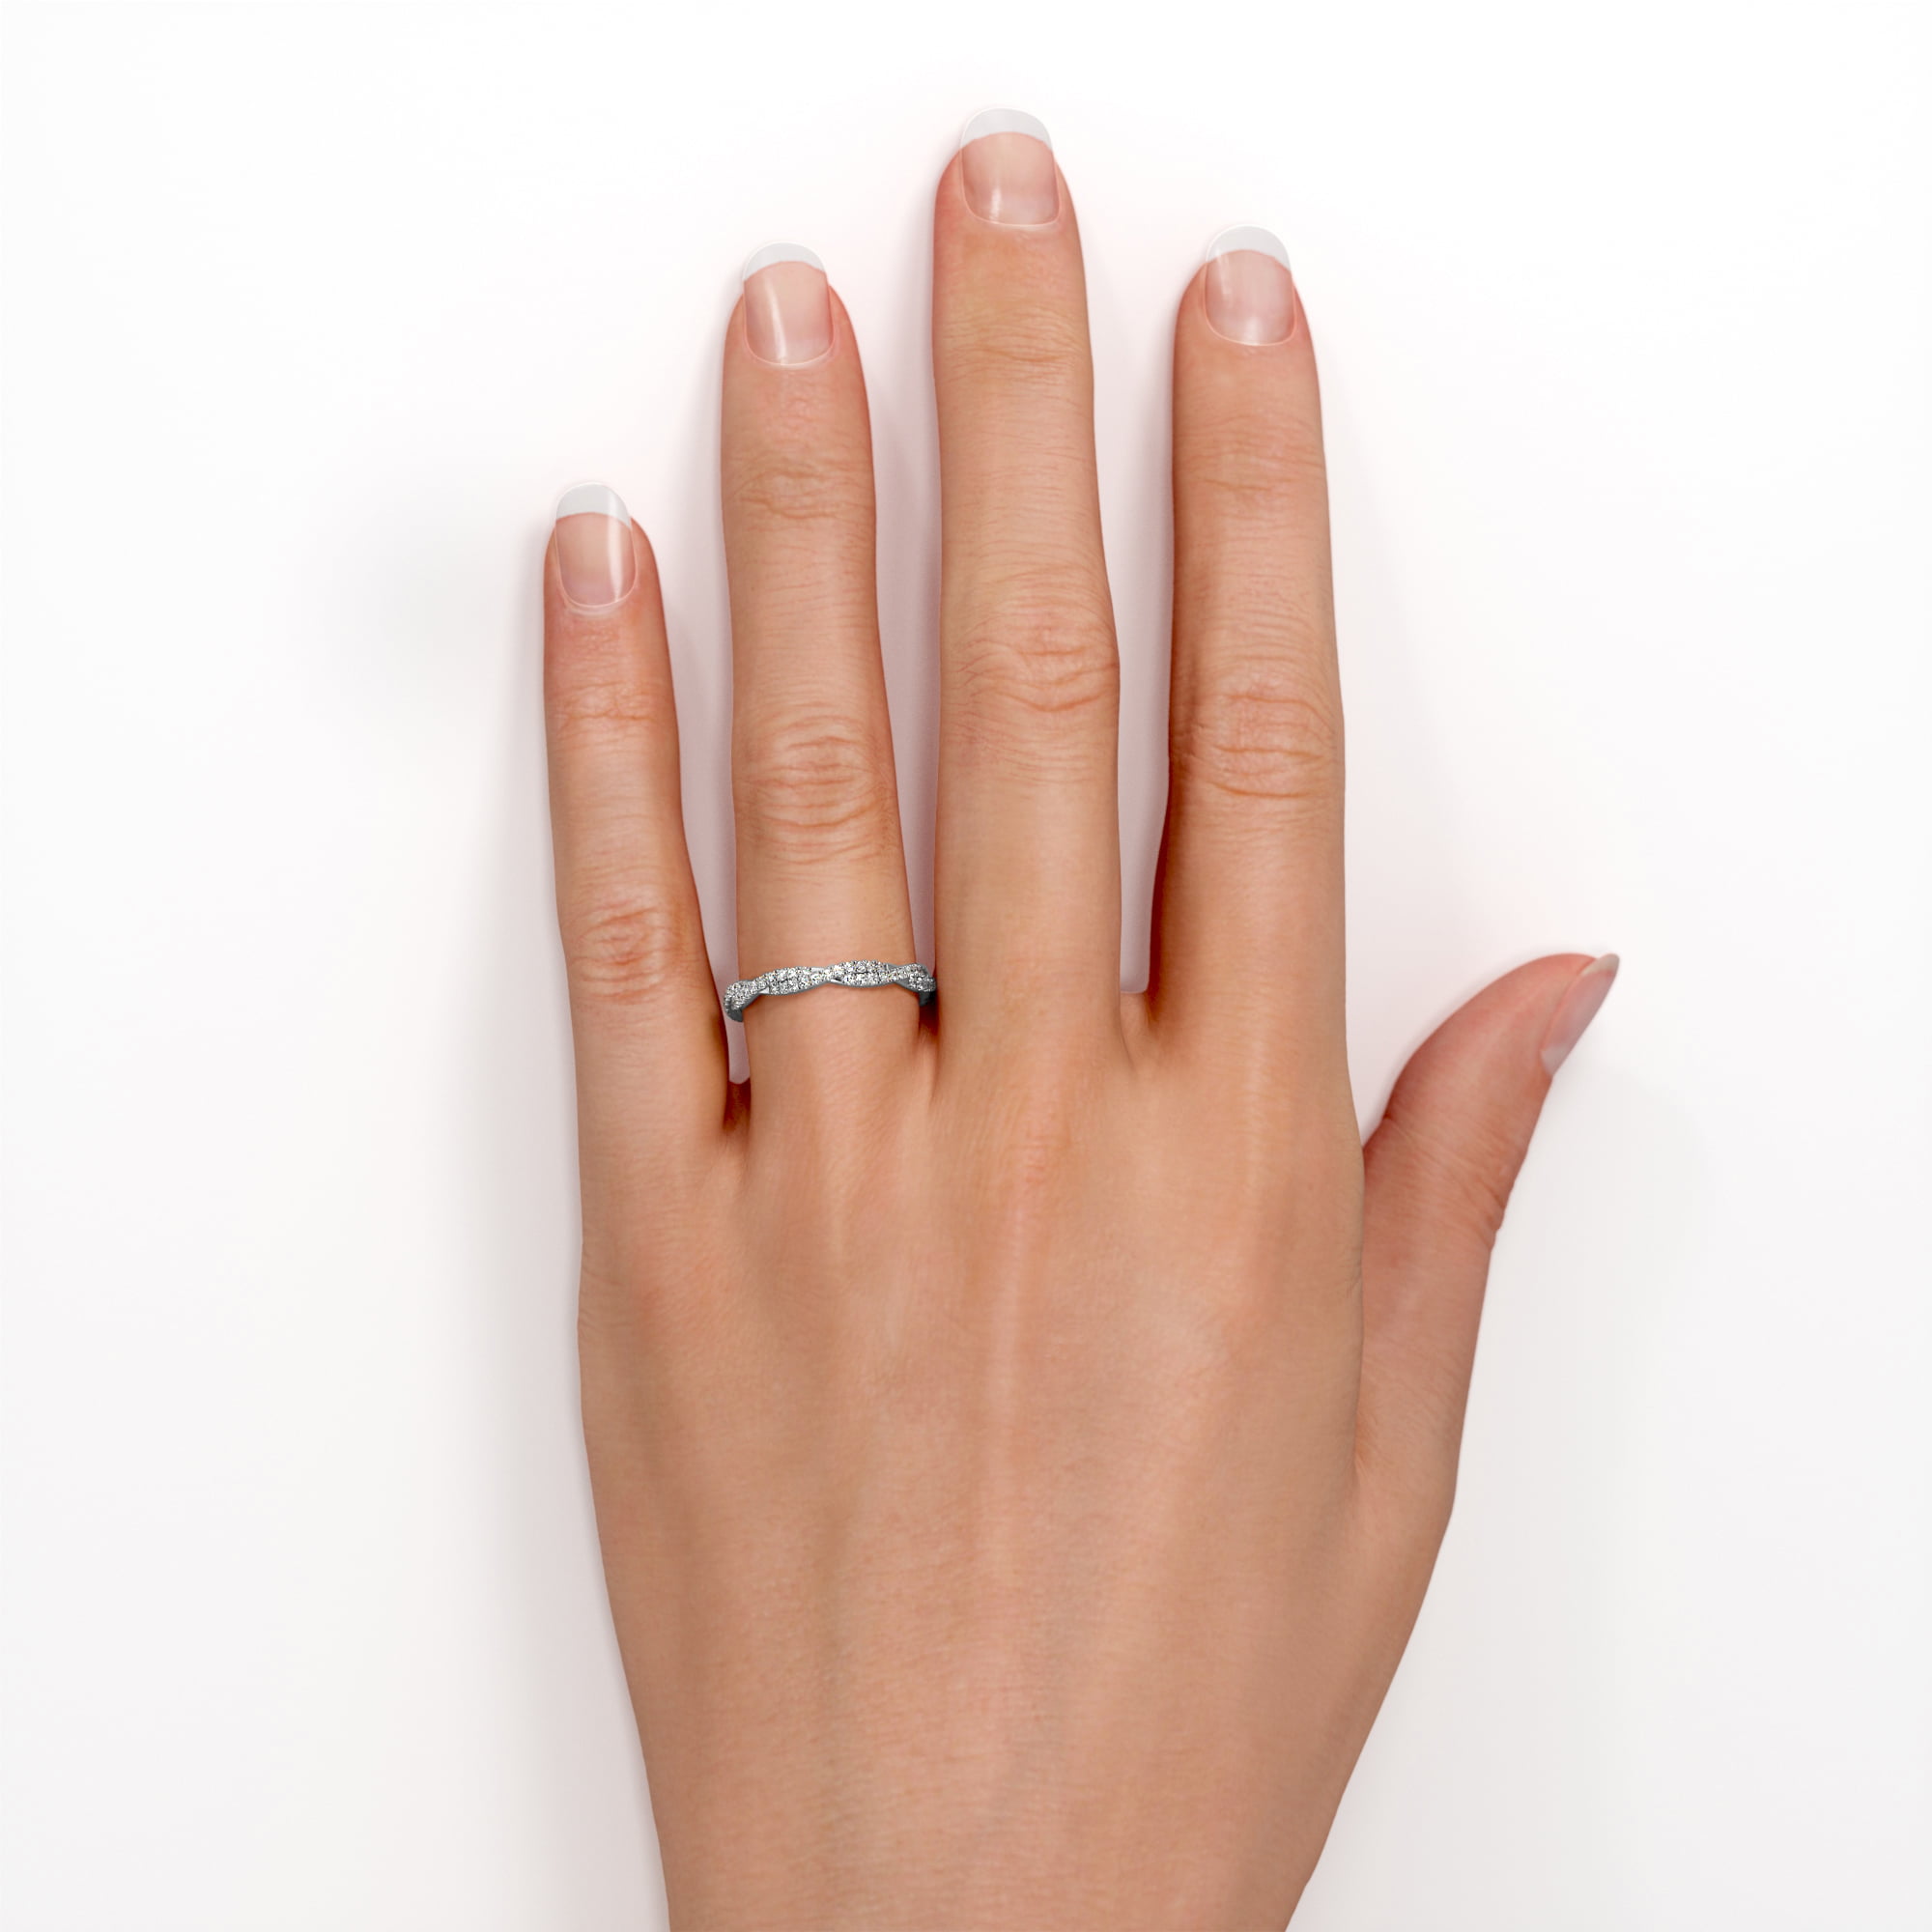 Monogram Infini Engagement Ring, White Gold and Diamond - Categories Q9M34C